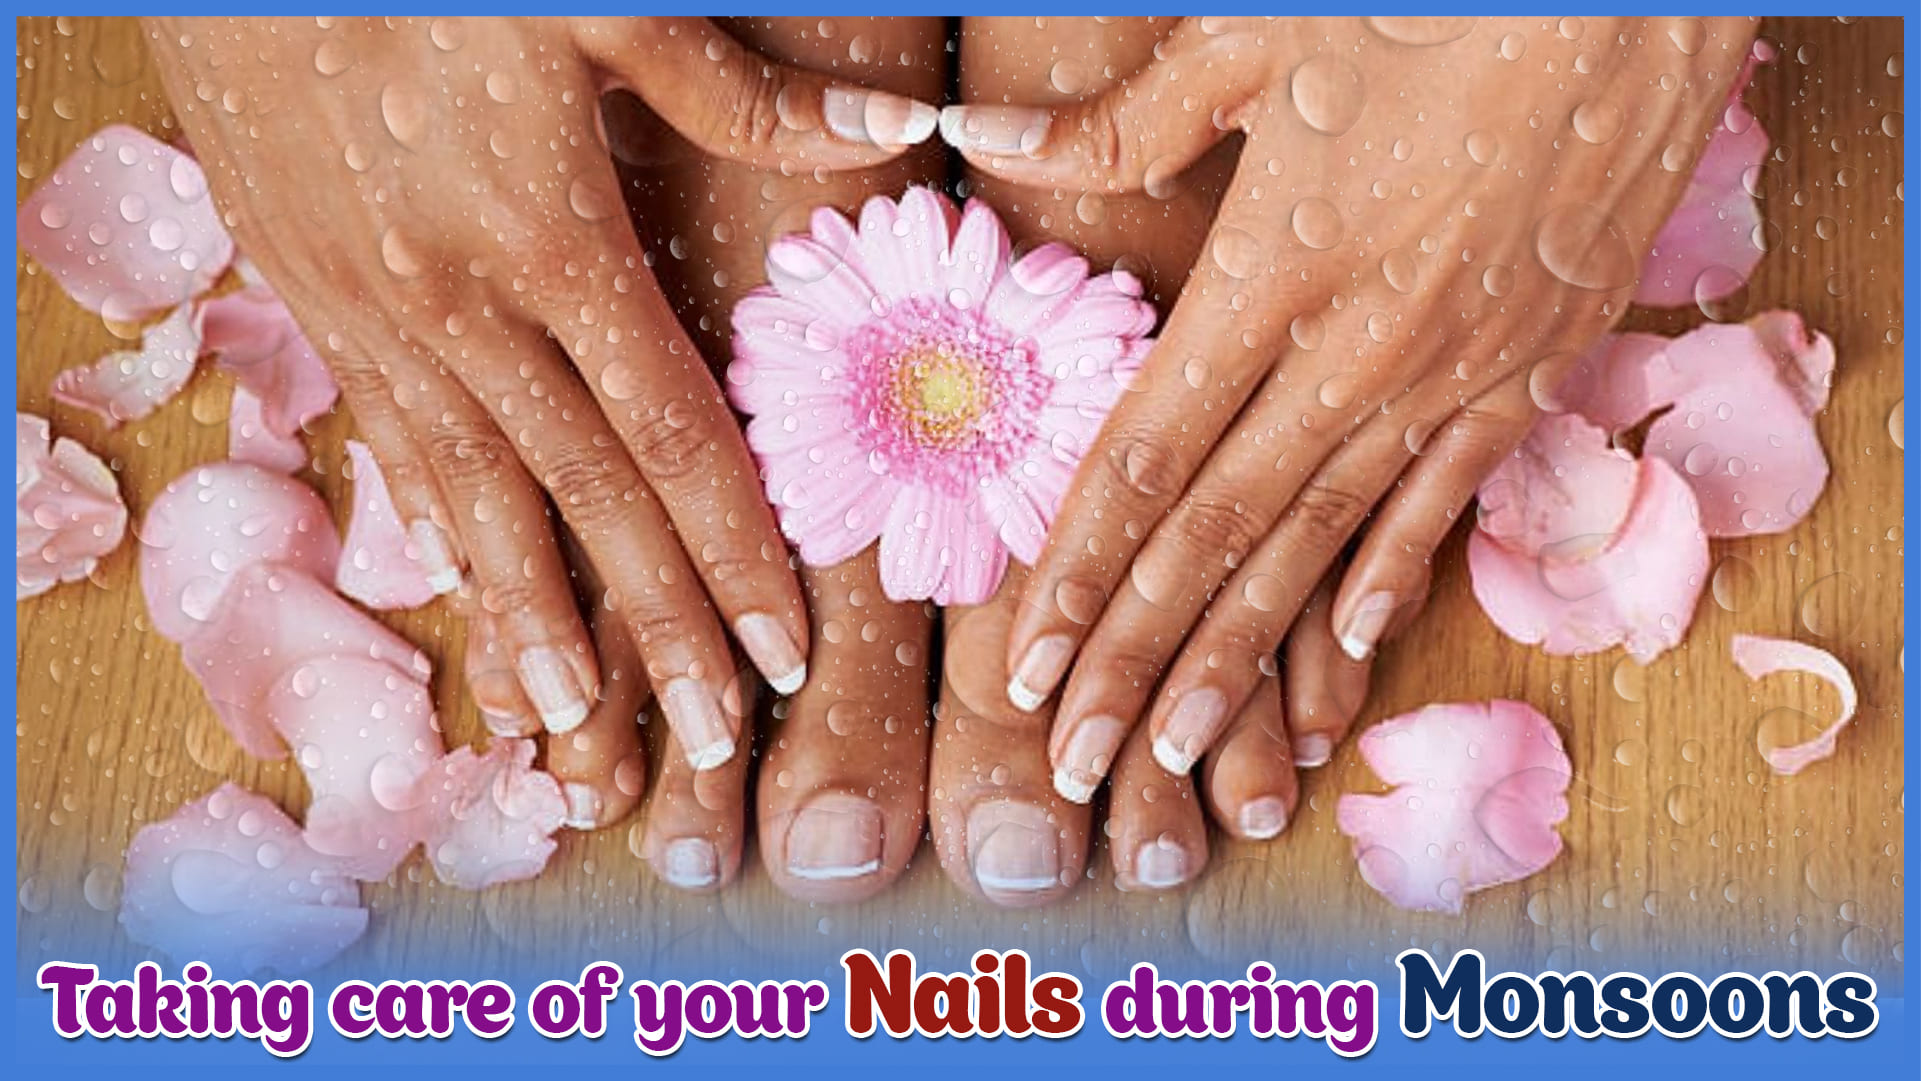 Learn Acrylic Nail Extension | Nail courses, Nail extensions, Nail art  courses